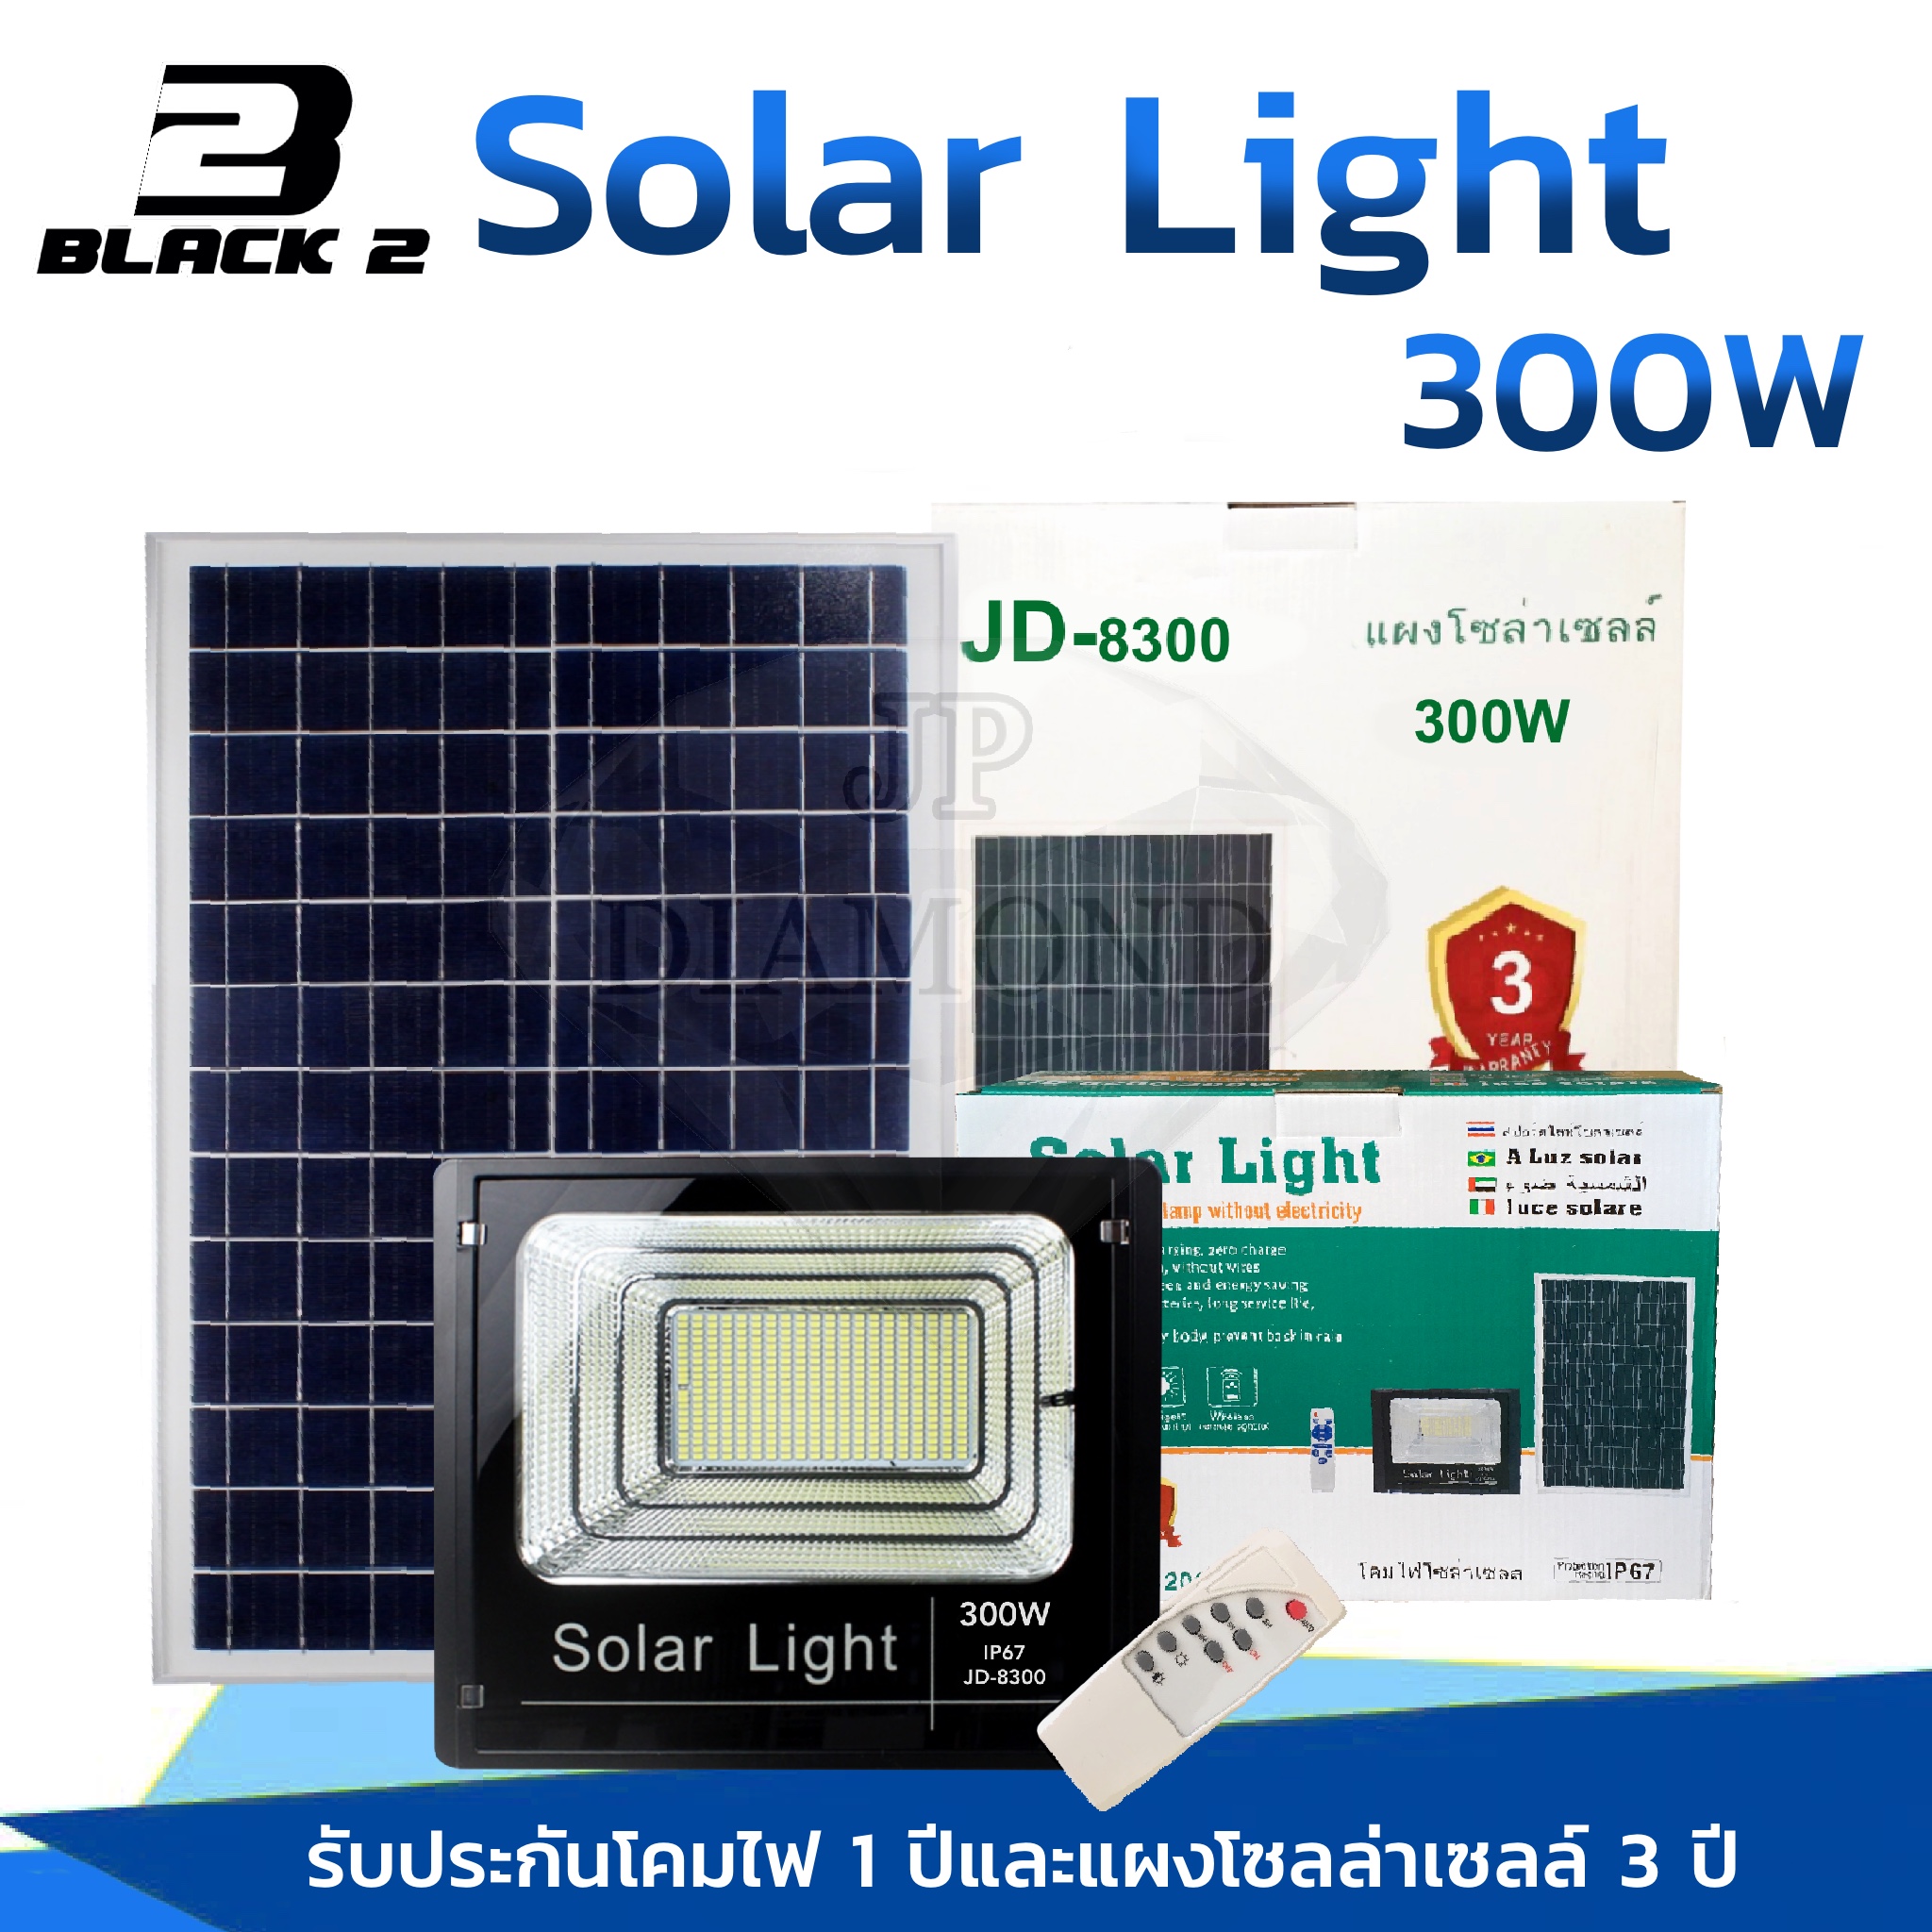 JD300W Solar Light แผ่นใหญ่ โคมไฟโซล่าเซล โคมไฟพลังงานแสงอาทิตย์ แสงสีขาว ไฟโซล่าเซลล์ ไฟ Solar Cell กันน้ำ IP67 โคมไฟสปอร์ตไลท์ พร้อมรีโมท ยี่ห้อ JD